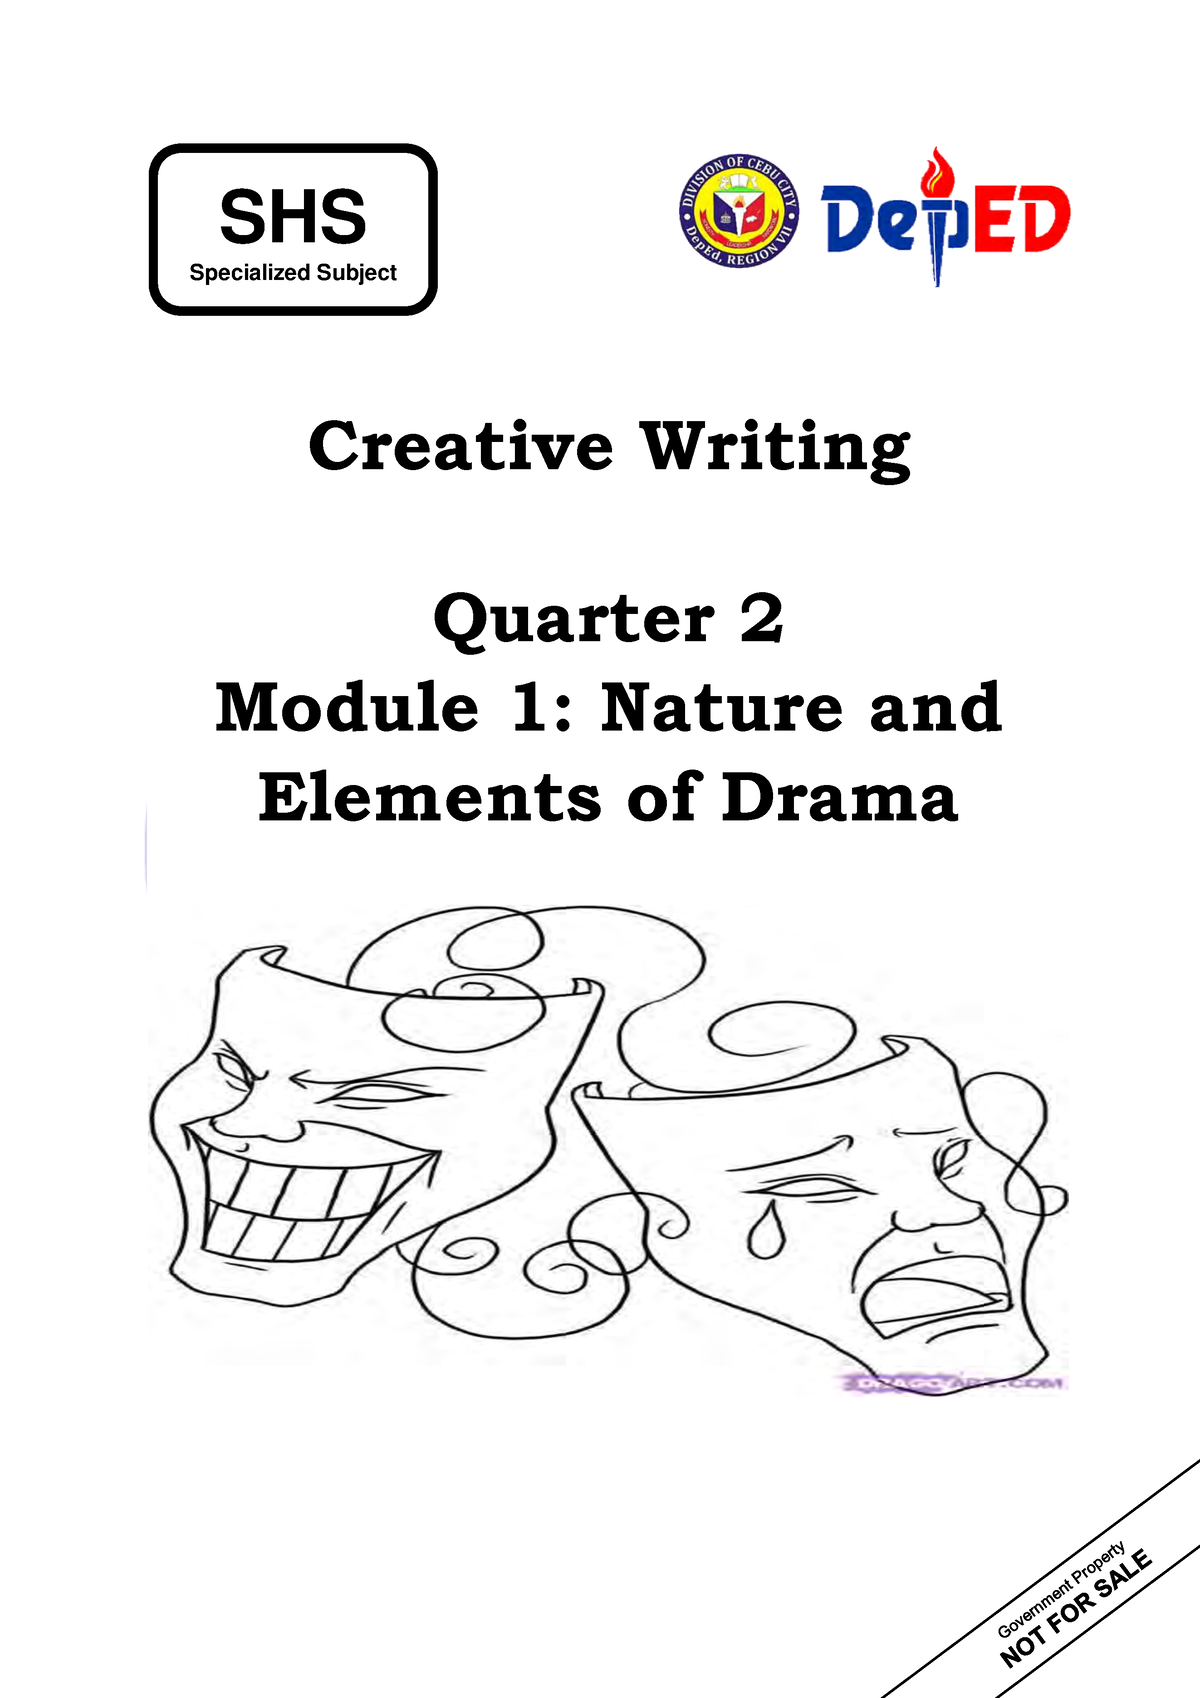 creative writing quarter 1 module 2 pdf free download